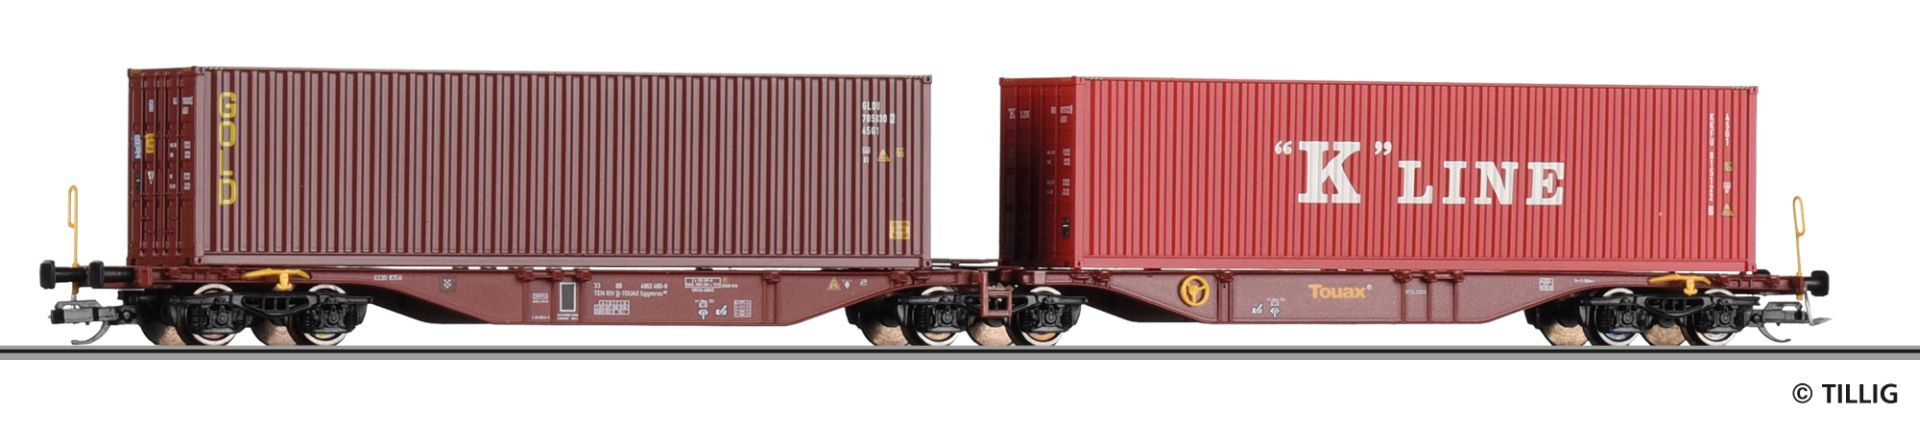 Tillig 18070 - Containertragwagen Sggmrss, Touax, Ep.VI 'K-LINE, GOLD'